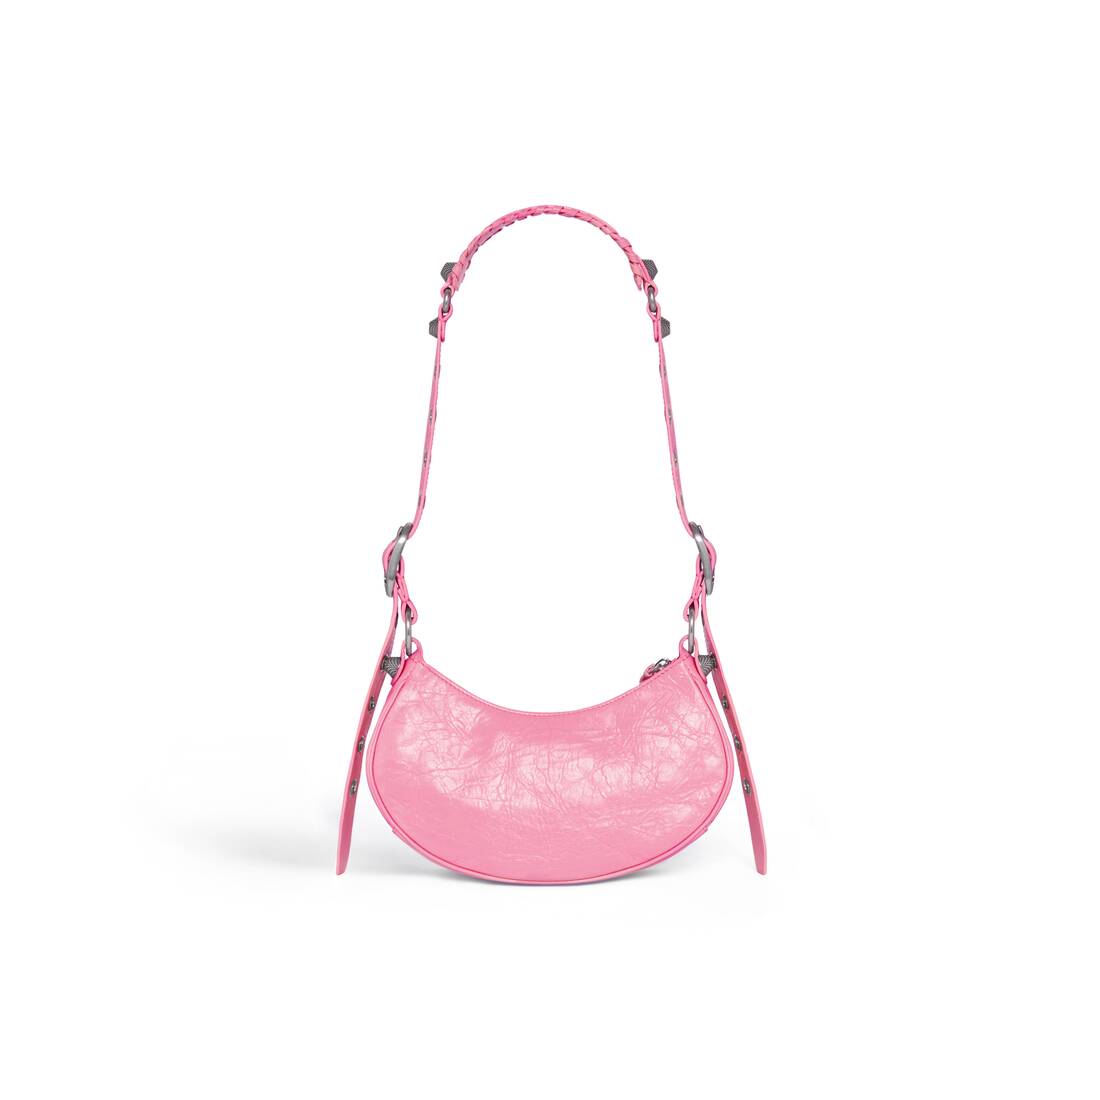 Zeceouar Clearance Items For Home Little Girls Purses Purses Girl's Shoulder  Bags Womens Handbags - Walmart.com